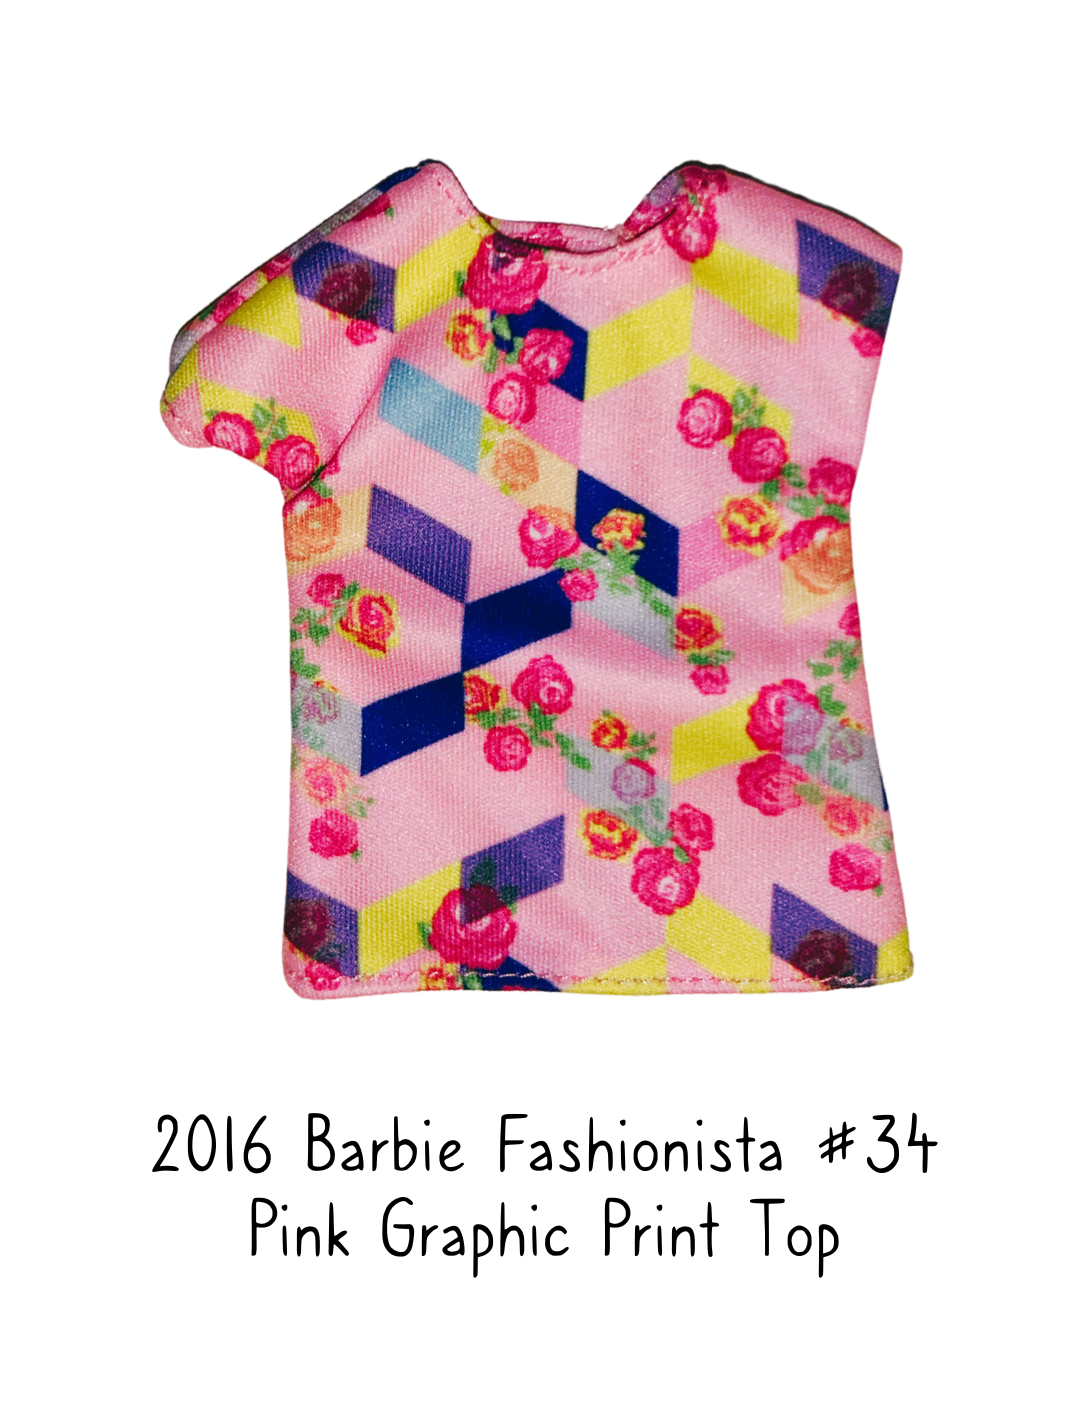 2016 Barbie Fashionista #34 Pink Graphic Print Top